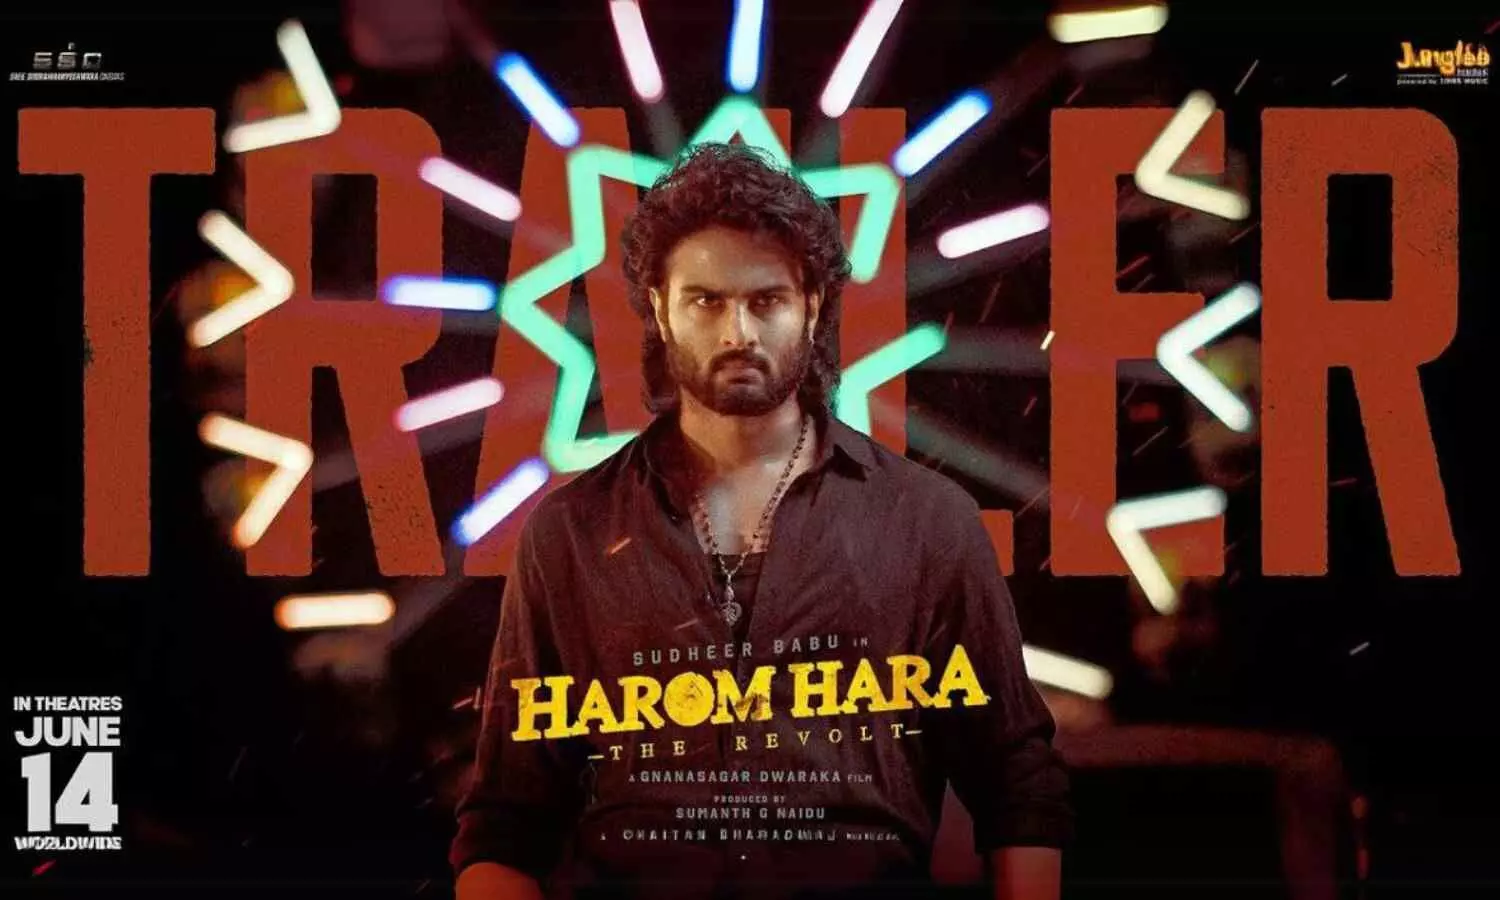 ‘Harom Hara’ Trailer: Sudheer Babu Shines in Gritty Action Drama